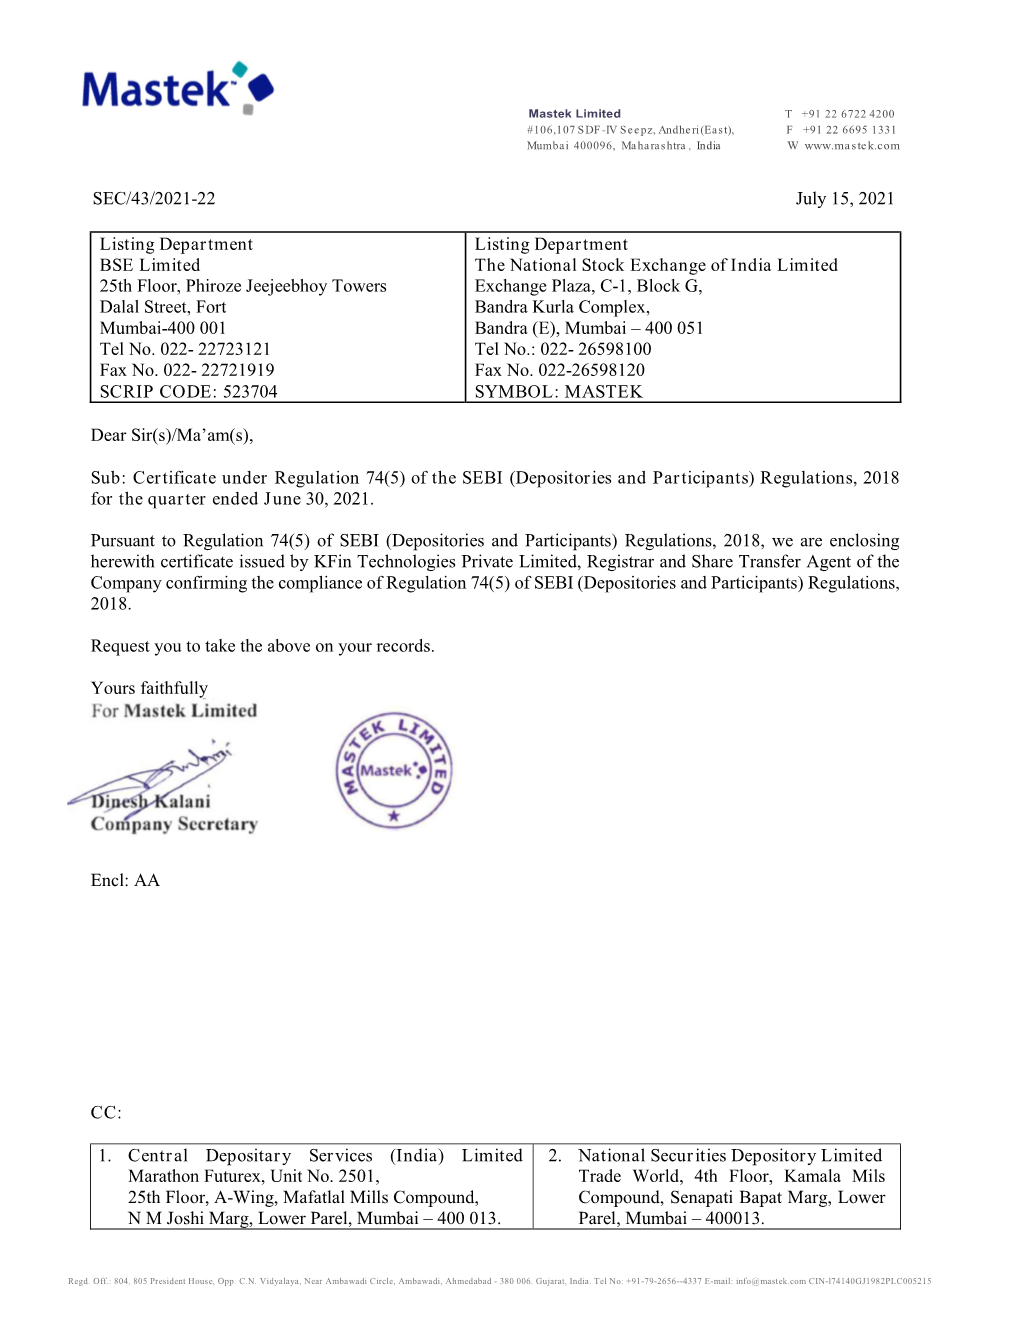 SEC/43/2021-22 July 15, 2021 Listing Department BSE Limited 25Th Floor, Phiroze Jeejeebhoy Towers Dalal Street, Fort Mumbai-400